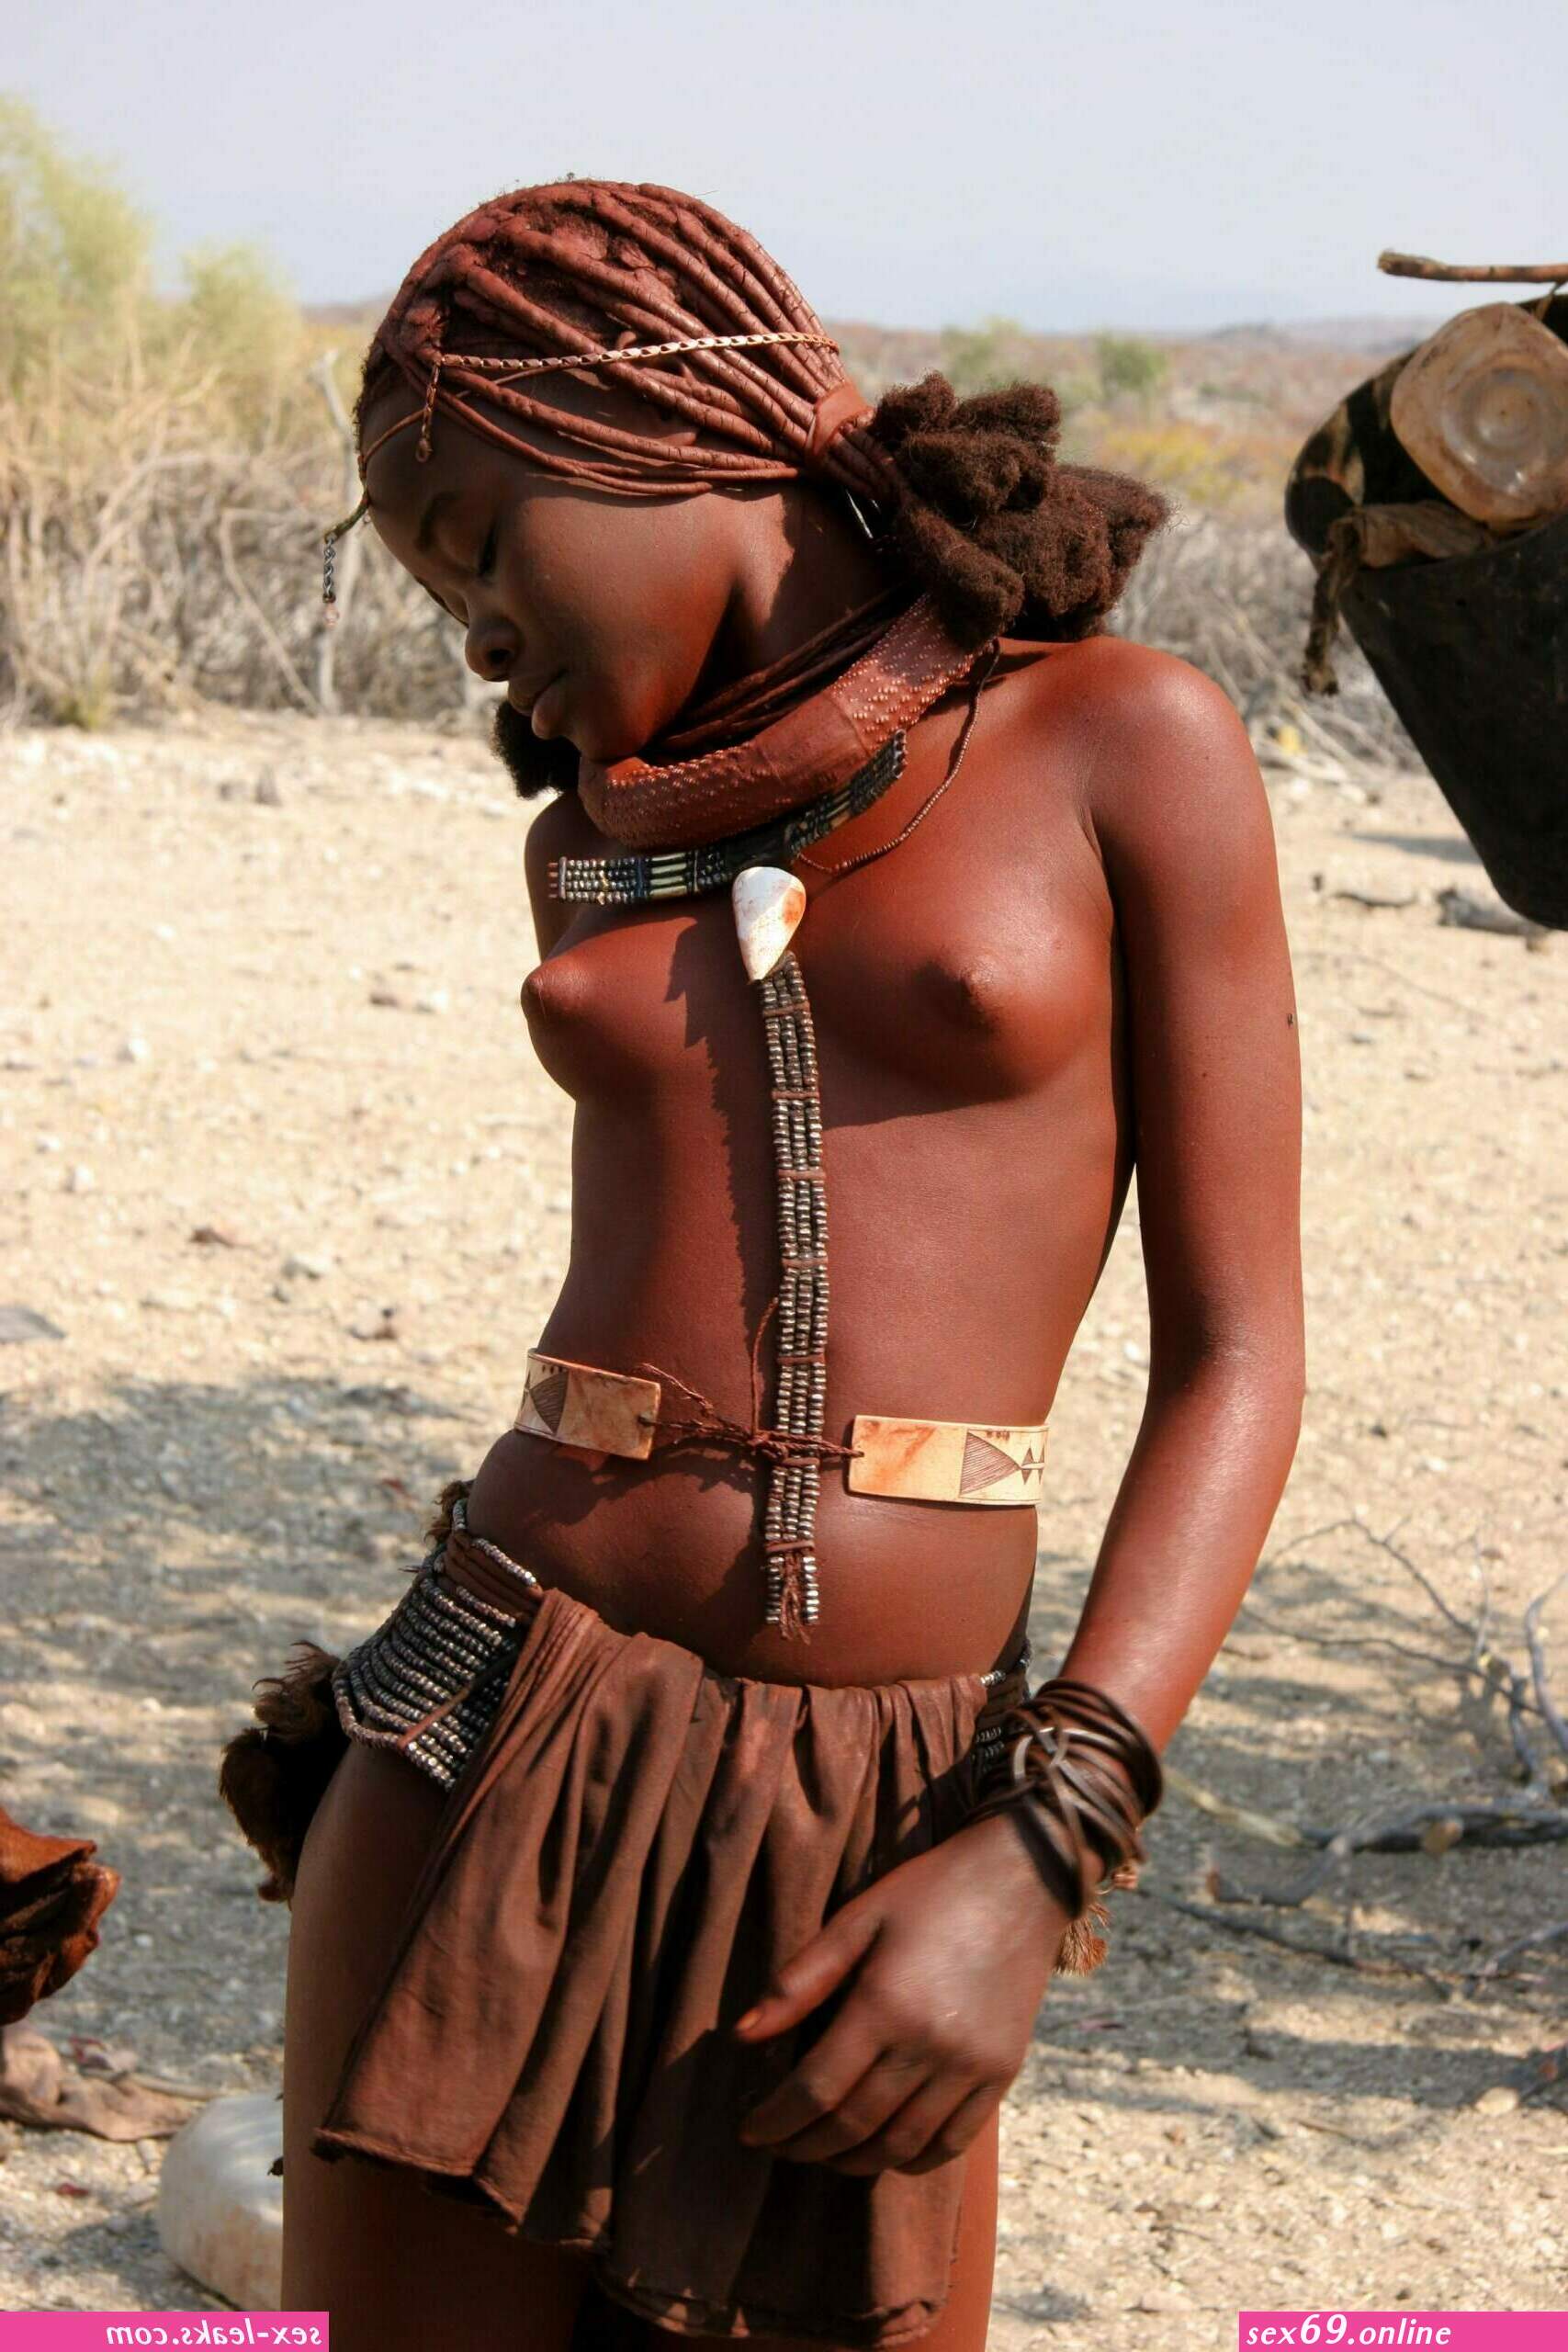 African Tribal Women Bdsm | BDSM Fetish